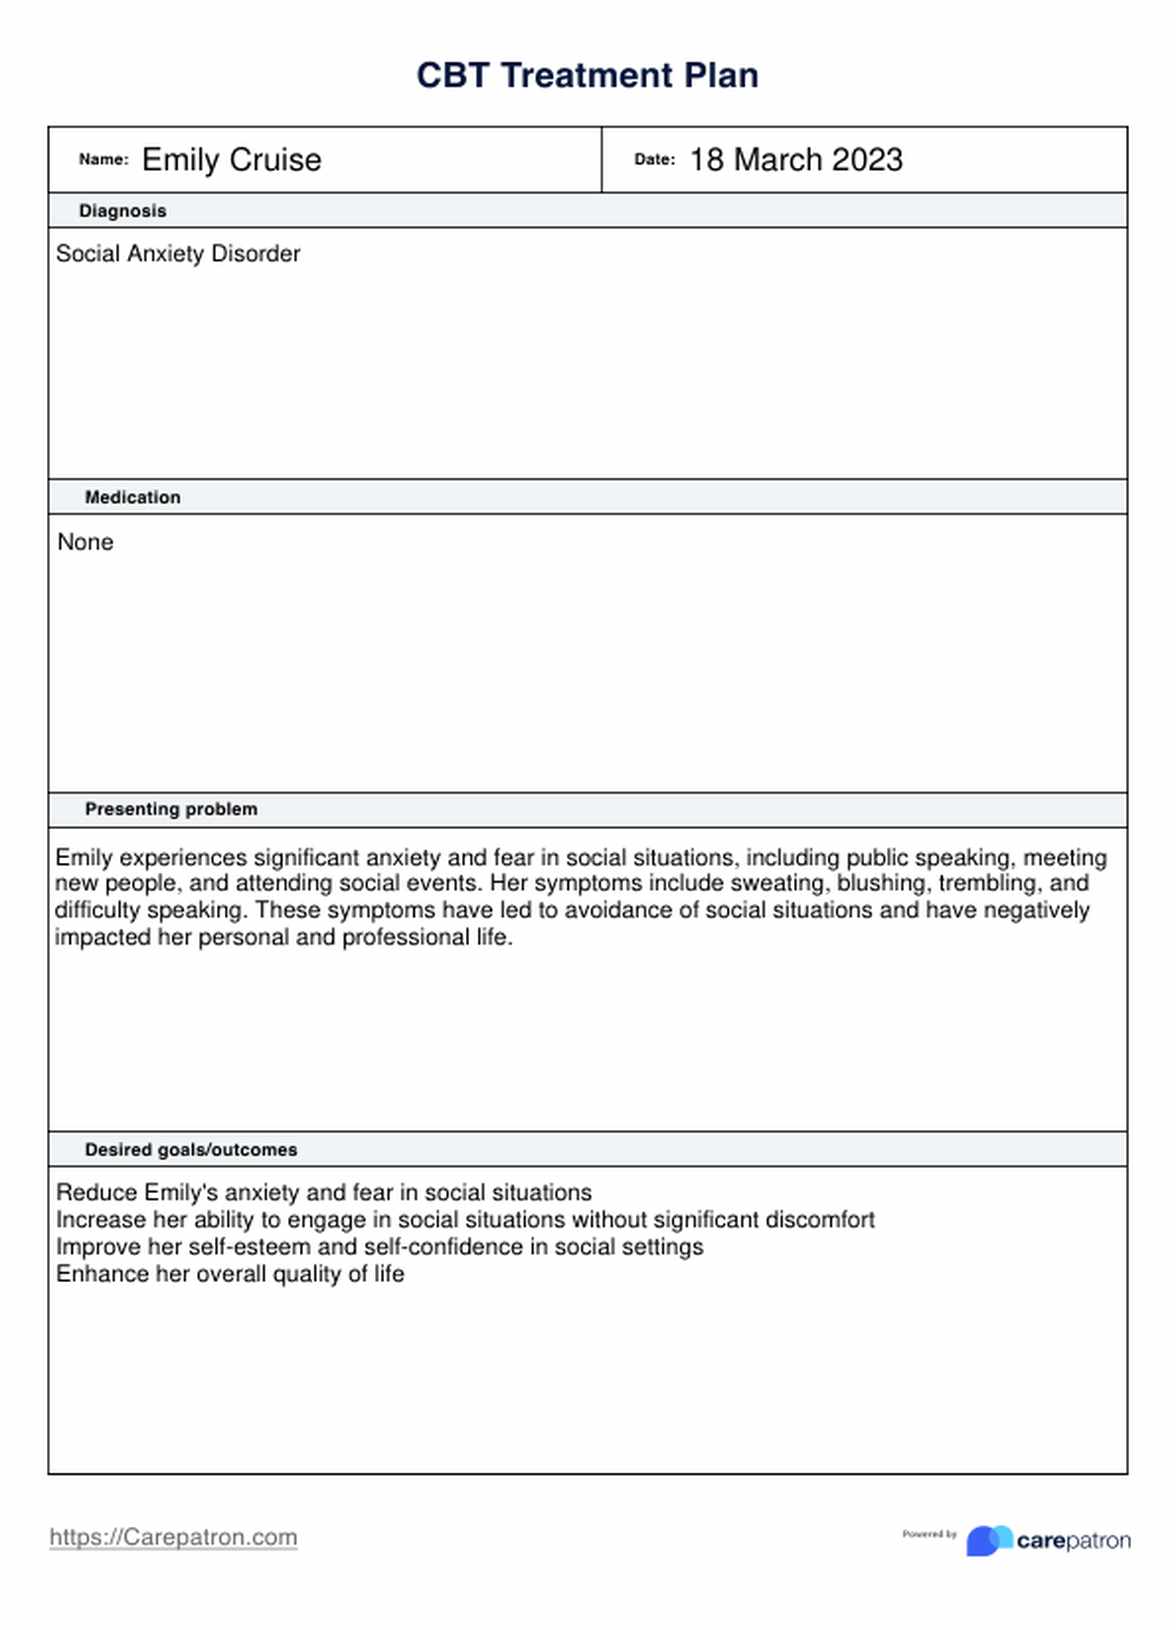 CBT Treatment Plans PDF Example